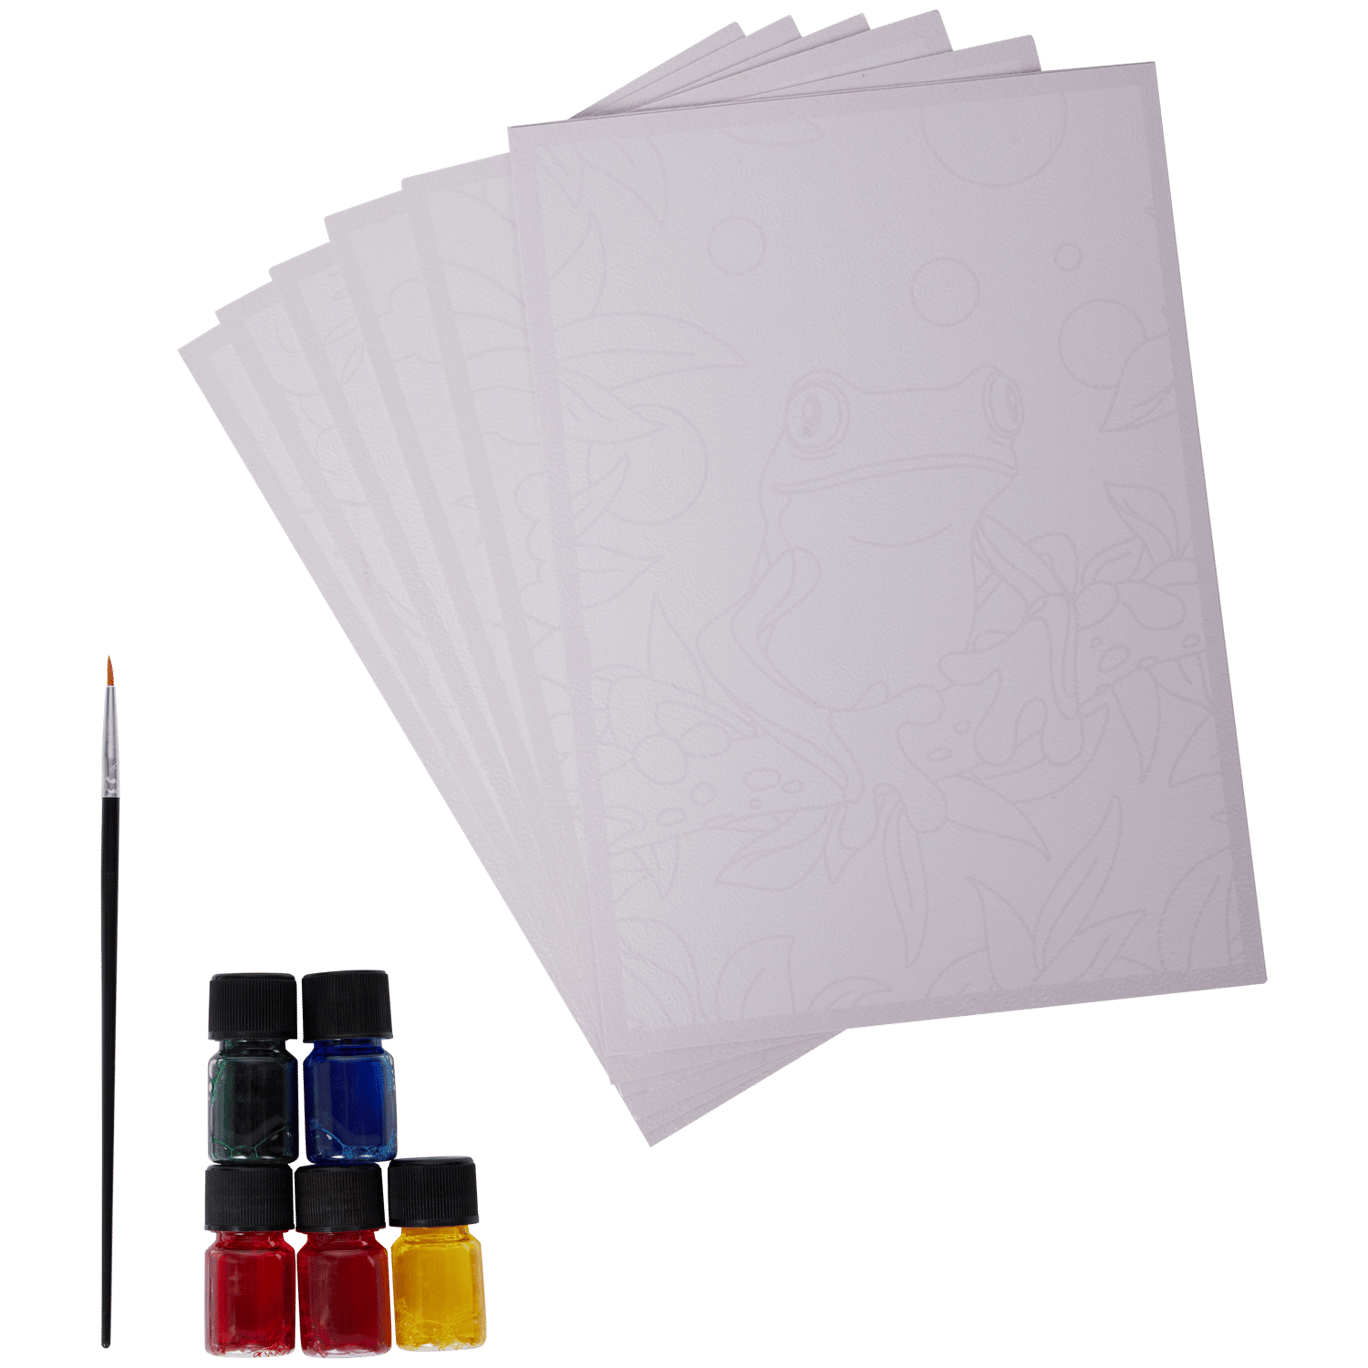 Kit de peinture aquarelle Kids Kingdom